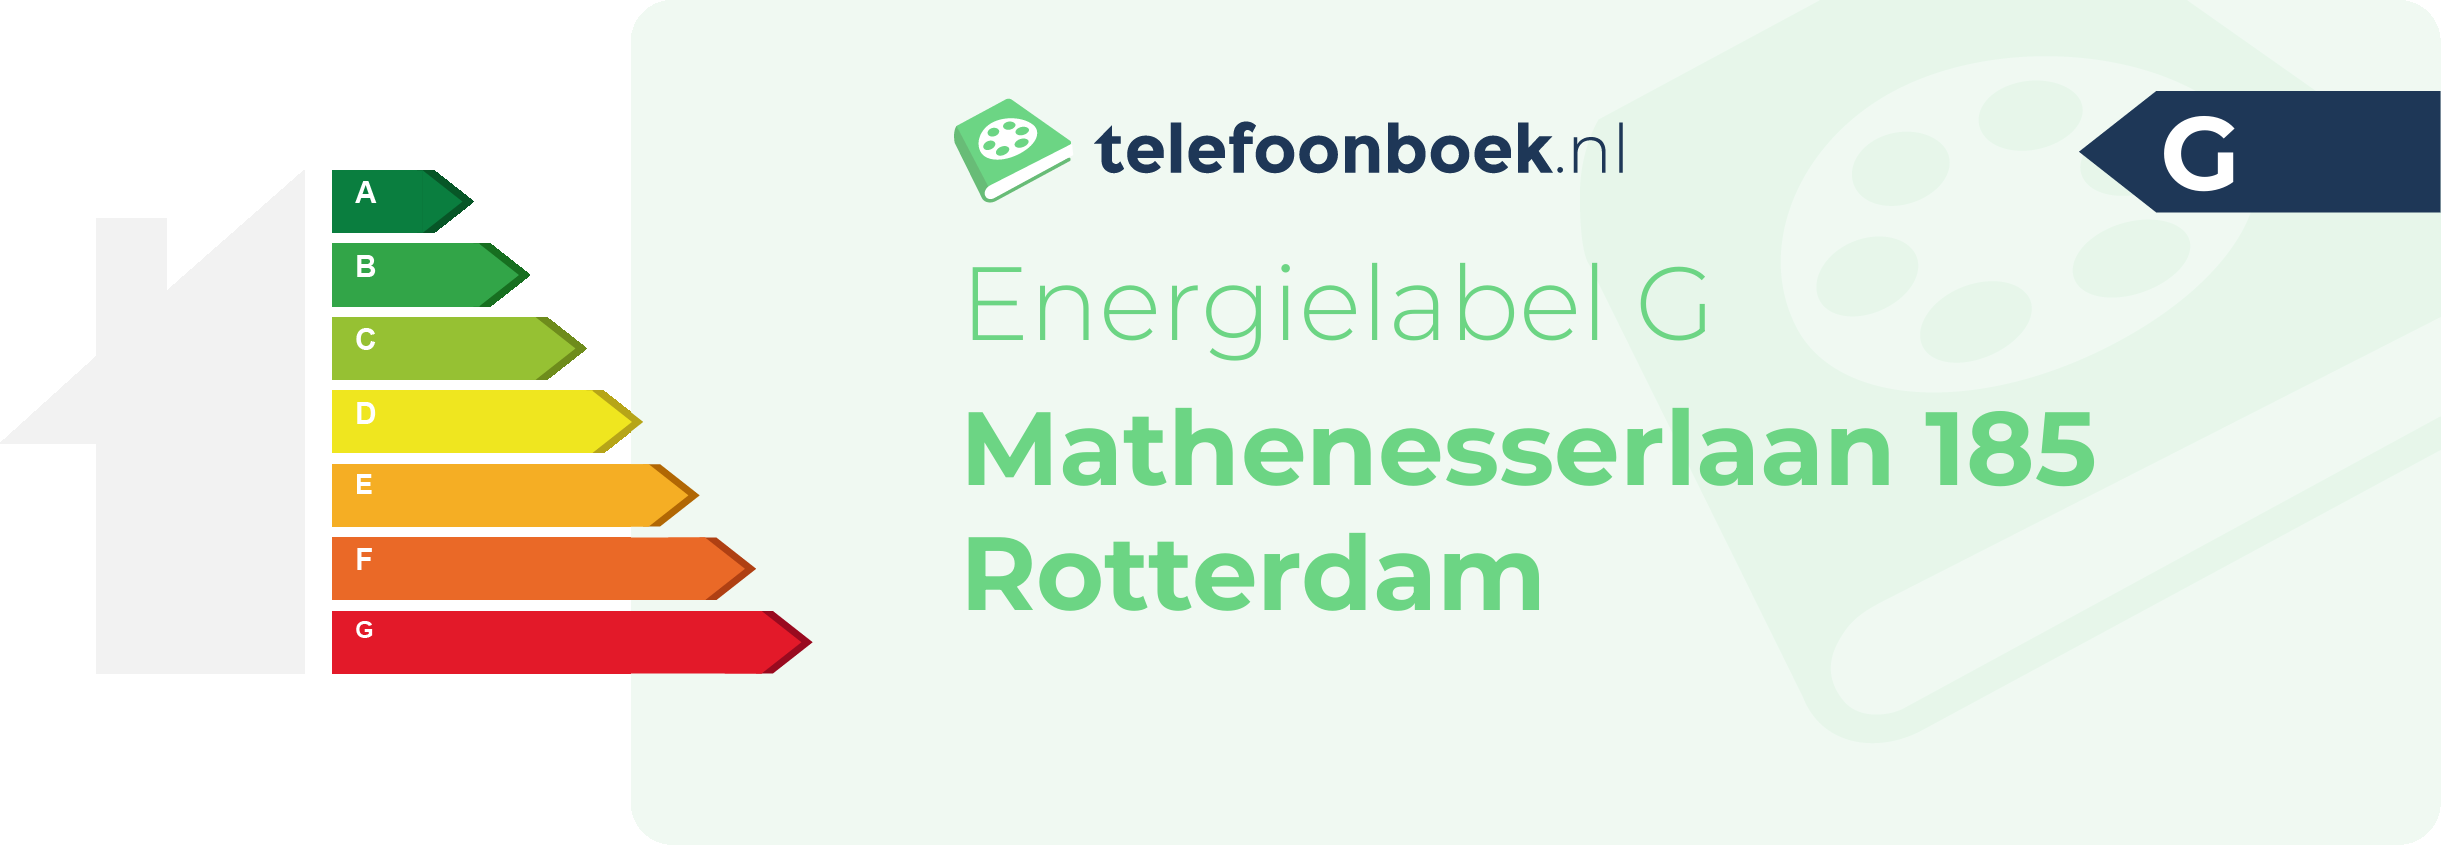 Energielabel Mathenesserlaan 185 Rotterdam